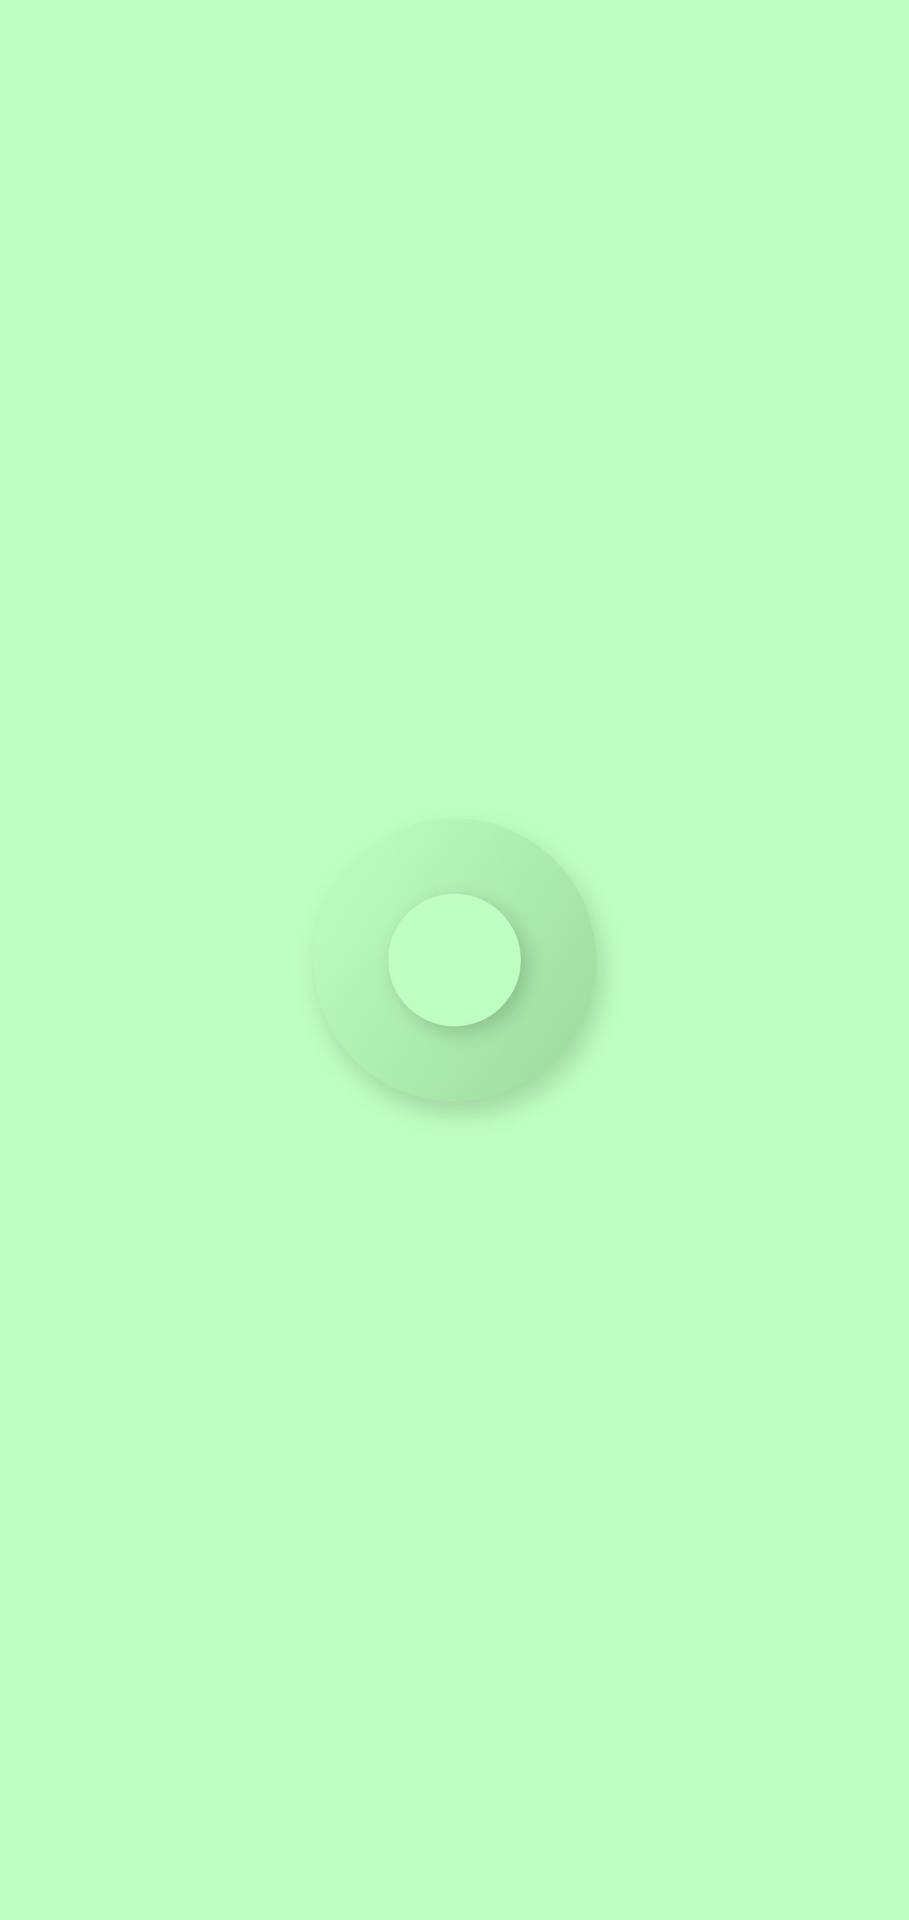 Subtle Super Light Green Circle Wallpaper